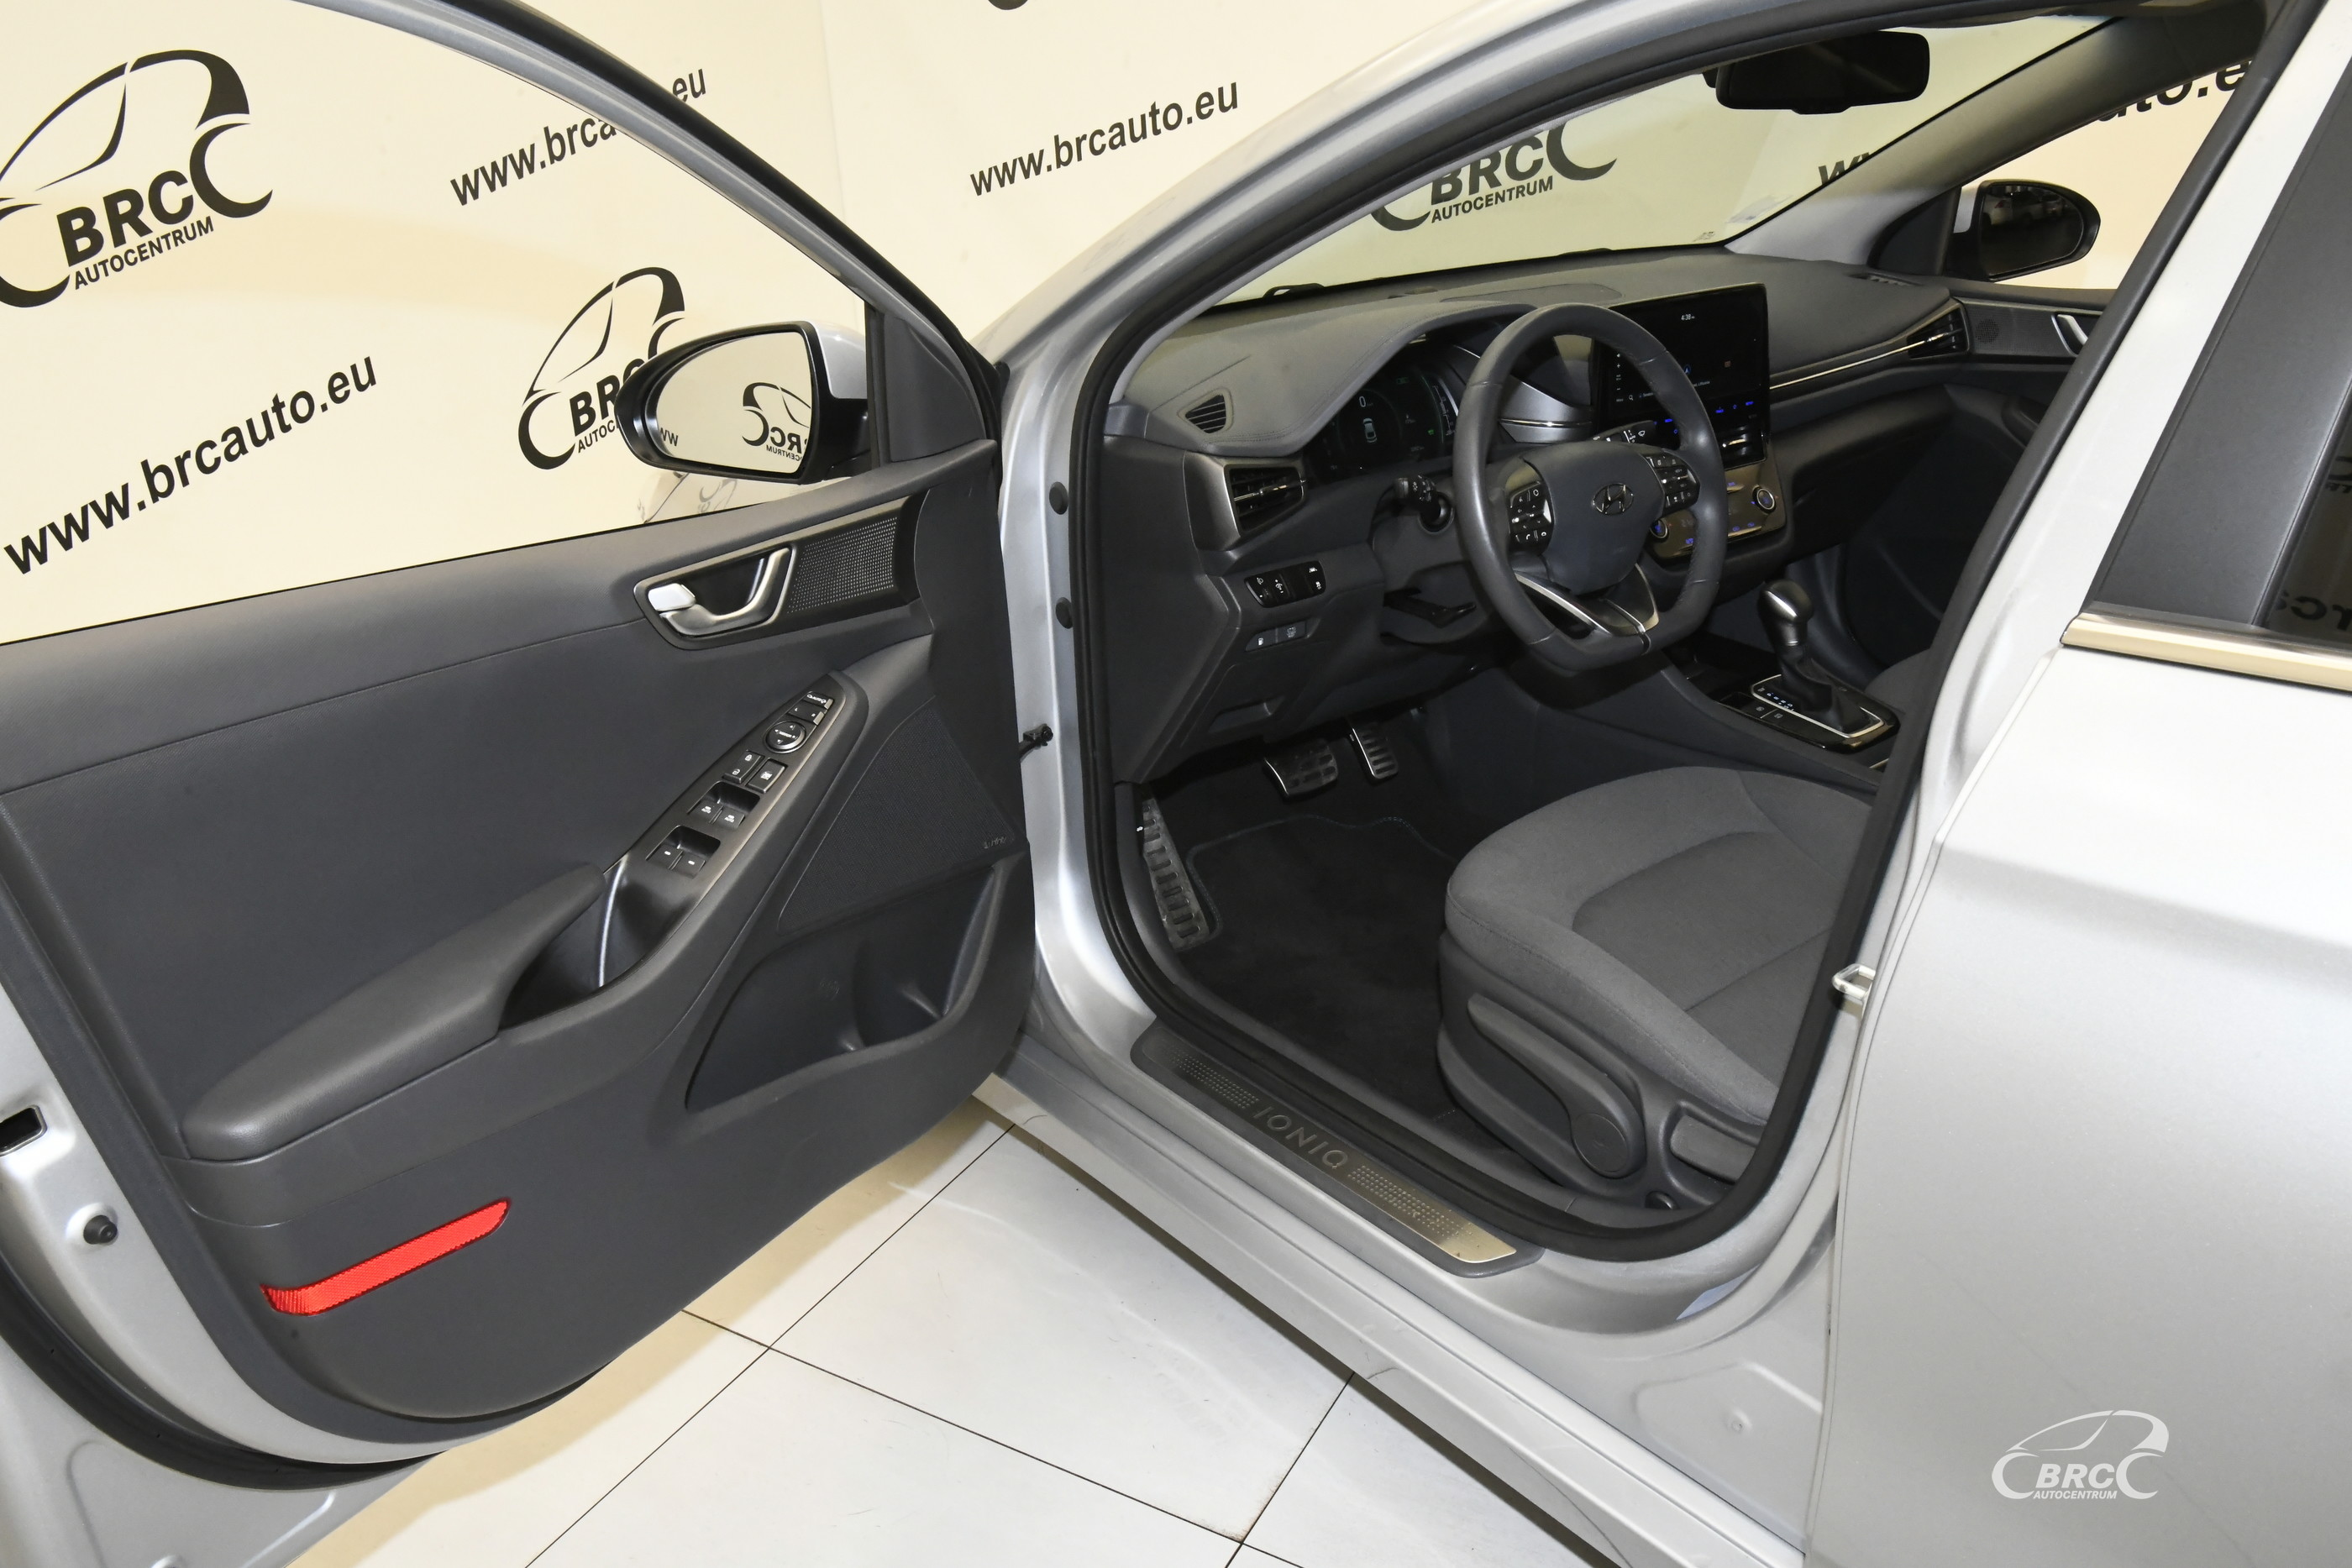 Hyundai Ioniq Hybrid Automatas